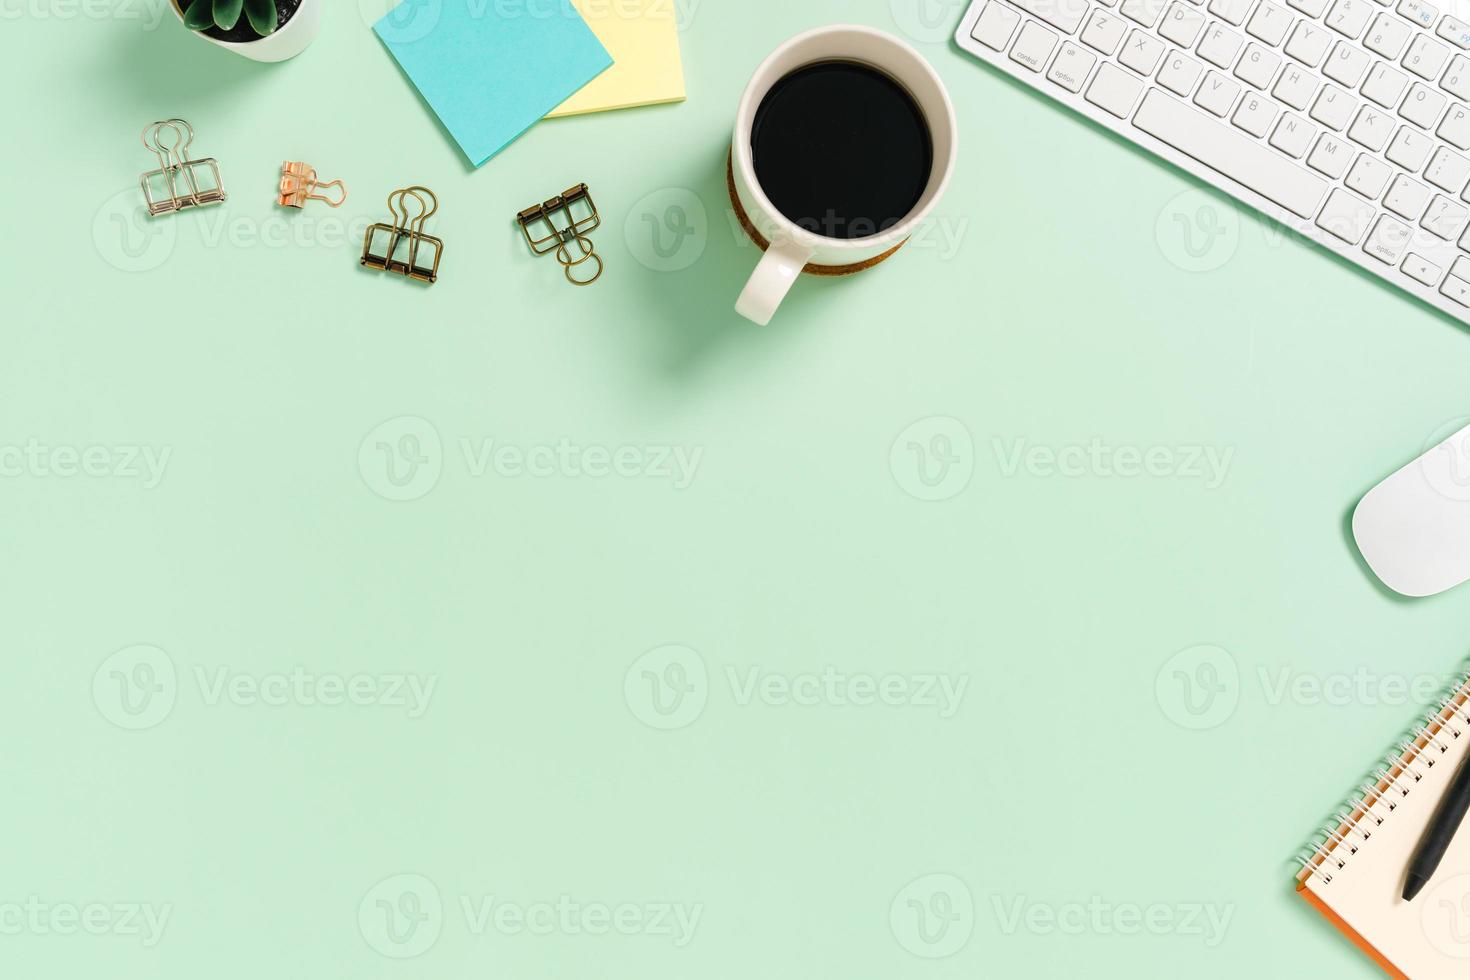 minimale werkruimte - creatieve platliggende foto van werkruimtebureau. bovenaanzicht bureau met toetsenbord en muis op pastel groene kleur achtergrond. bovenaanzicht met kopieerruimte, platliggende fotografie.